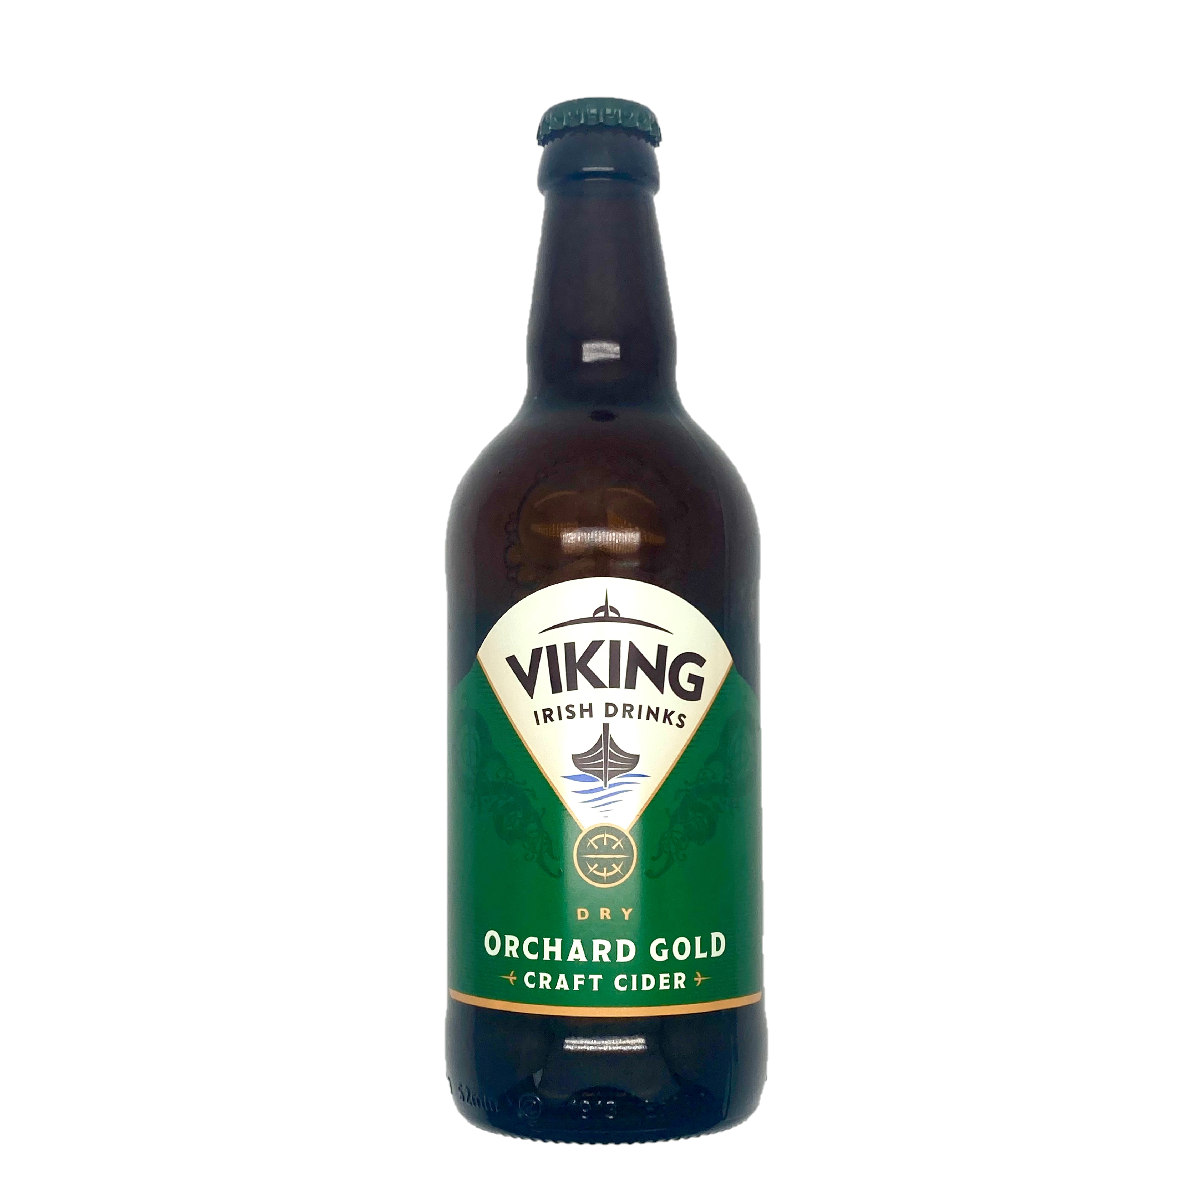 Viking Irish Orchard Gold Dry Craft Cider 500ml